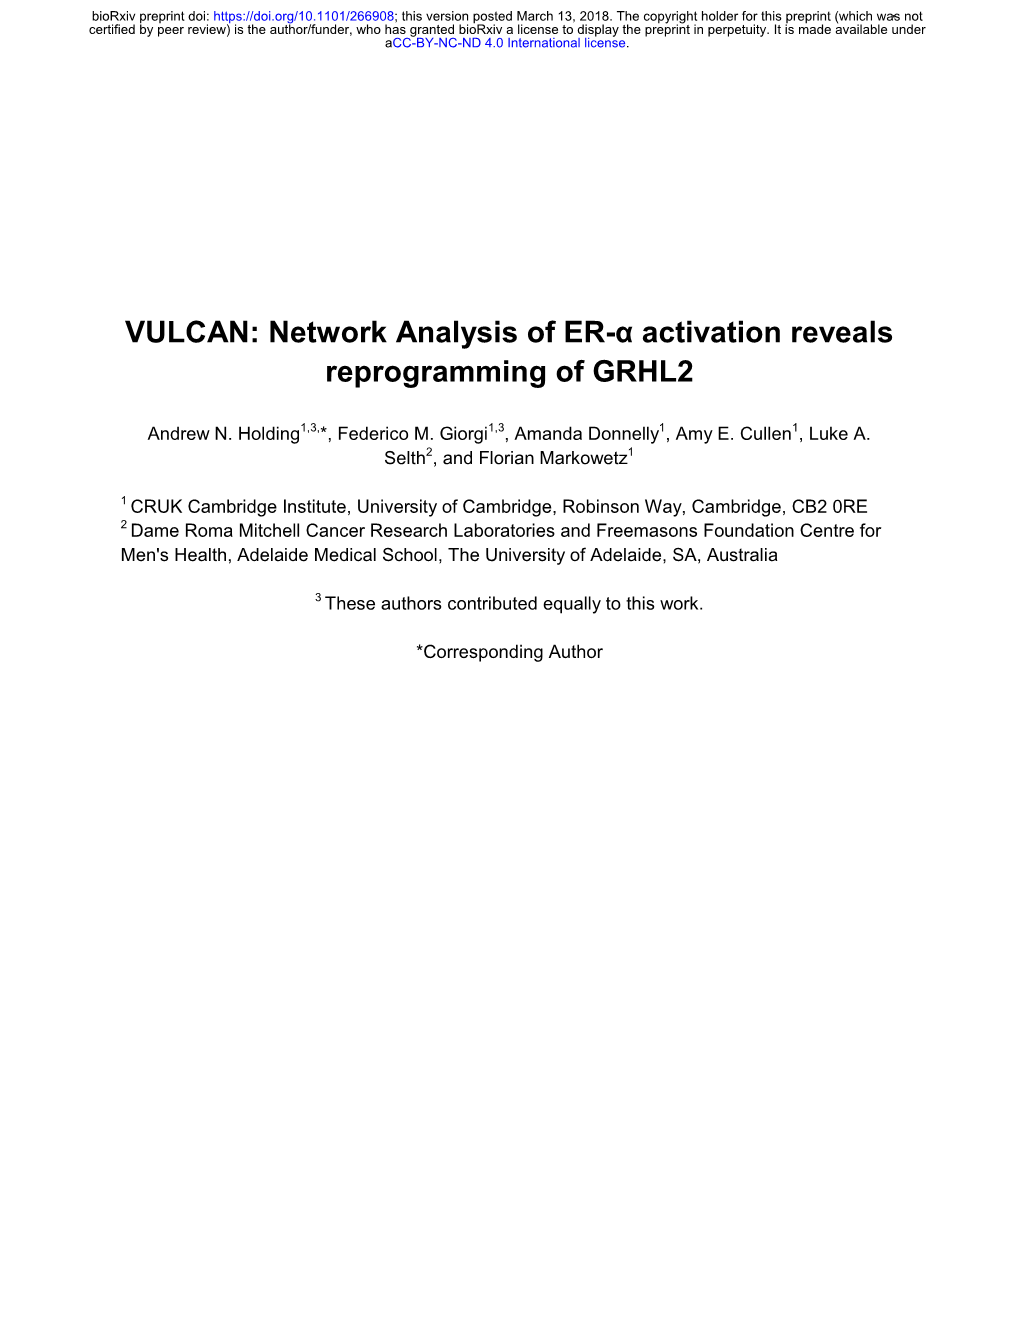 VULCAN: Network Analysis of ER-Α Activation Reveals Reprogramming of GRHL2